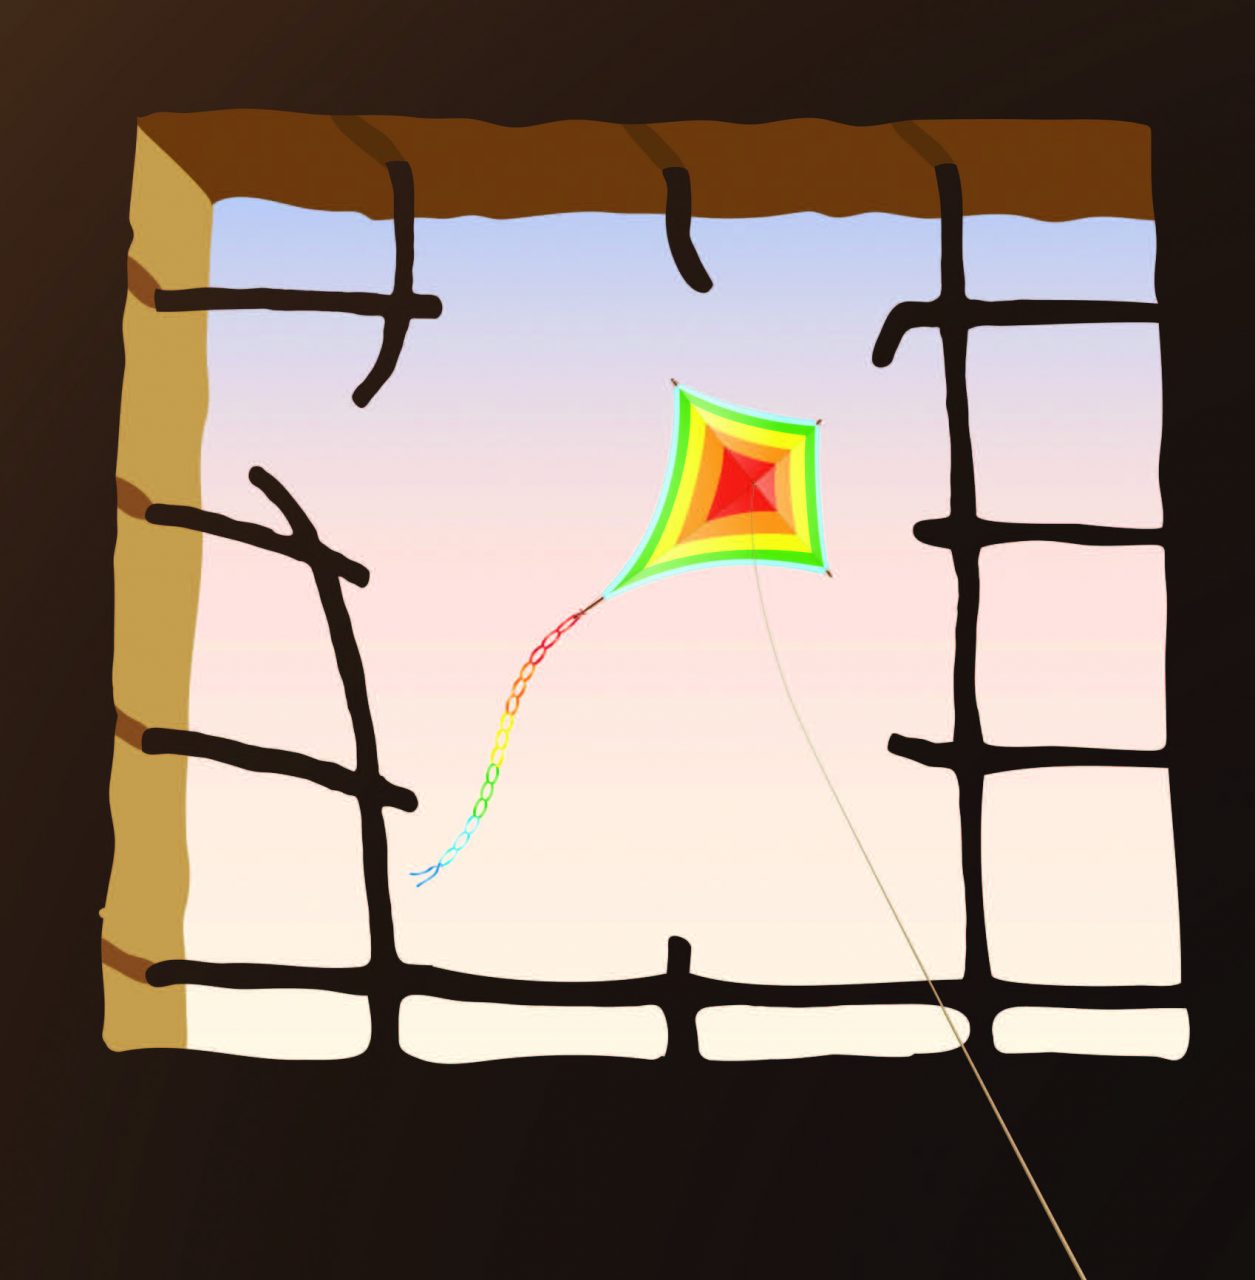 broken window with kite flying through it